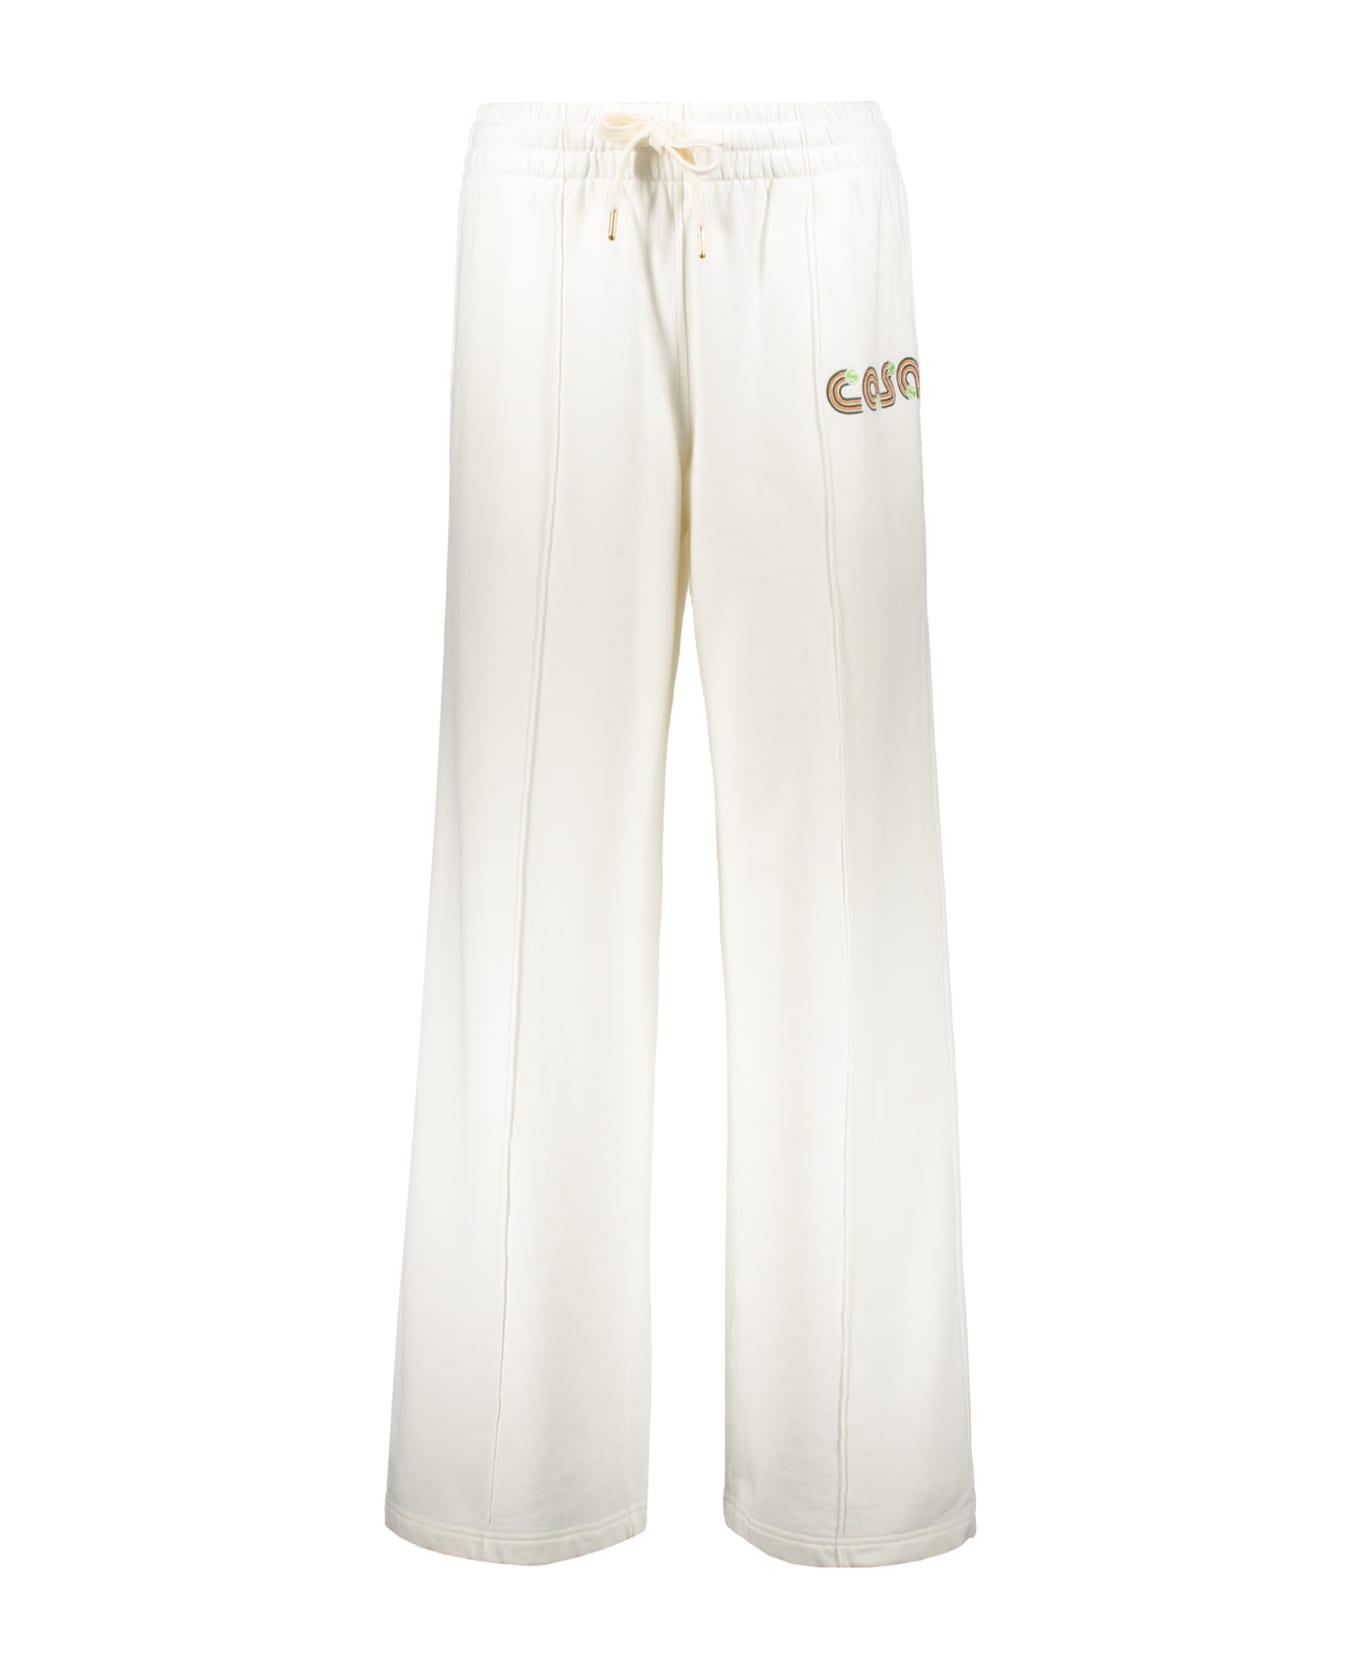 Casablanca White Cotton Pants - White ボトムス